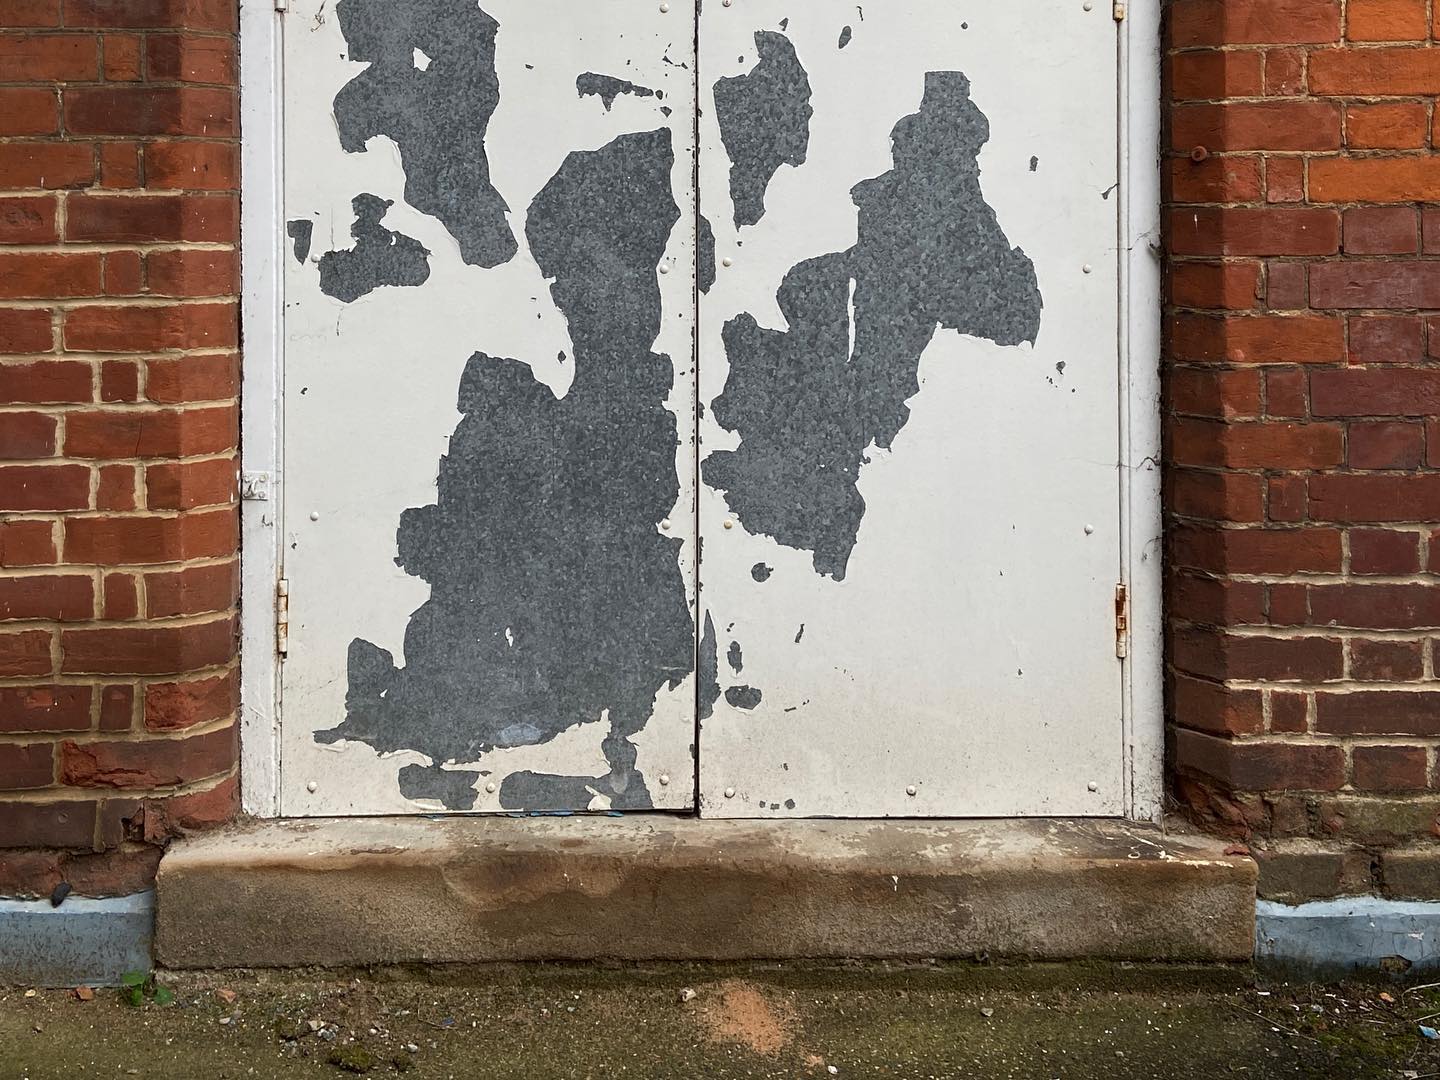 metal door painted white, dramatic peeling in blobby shapes